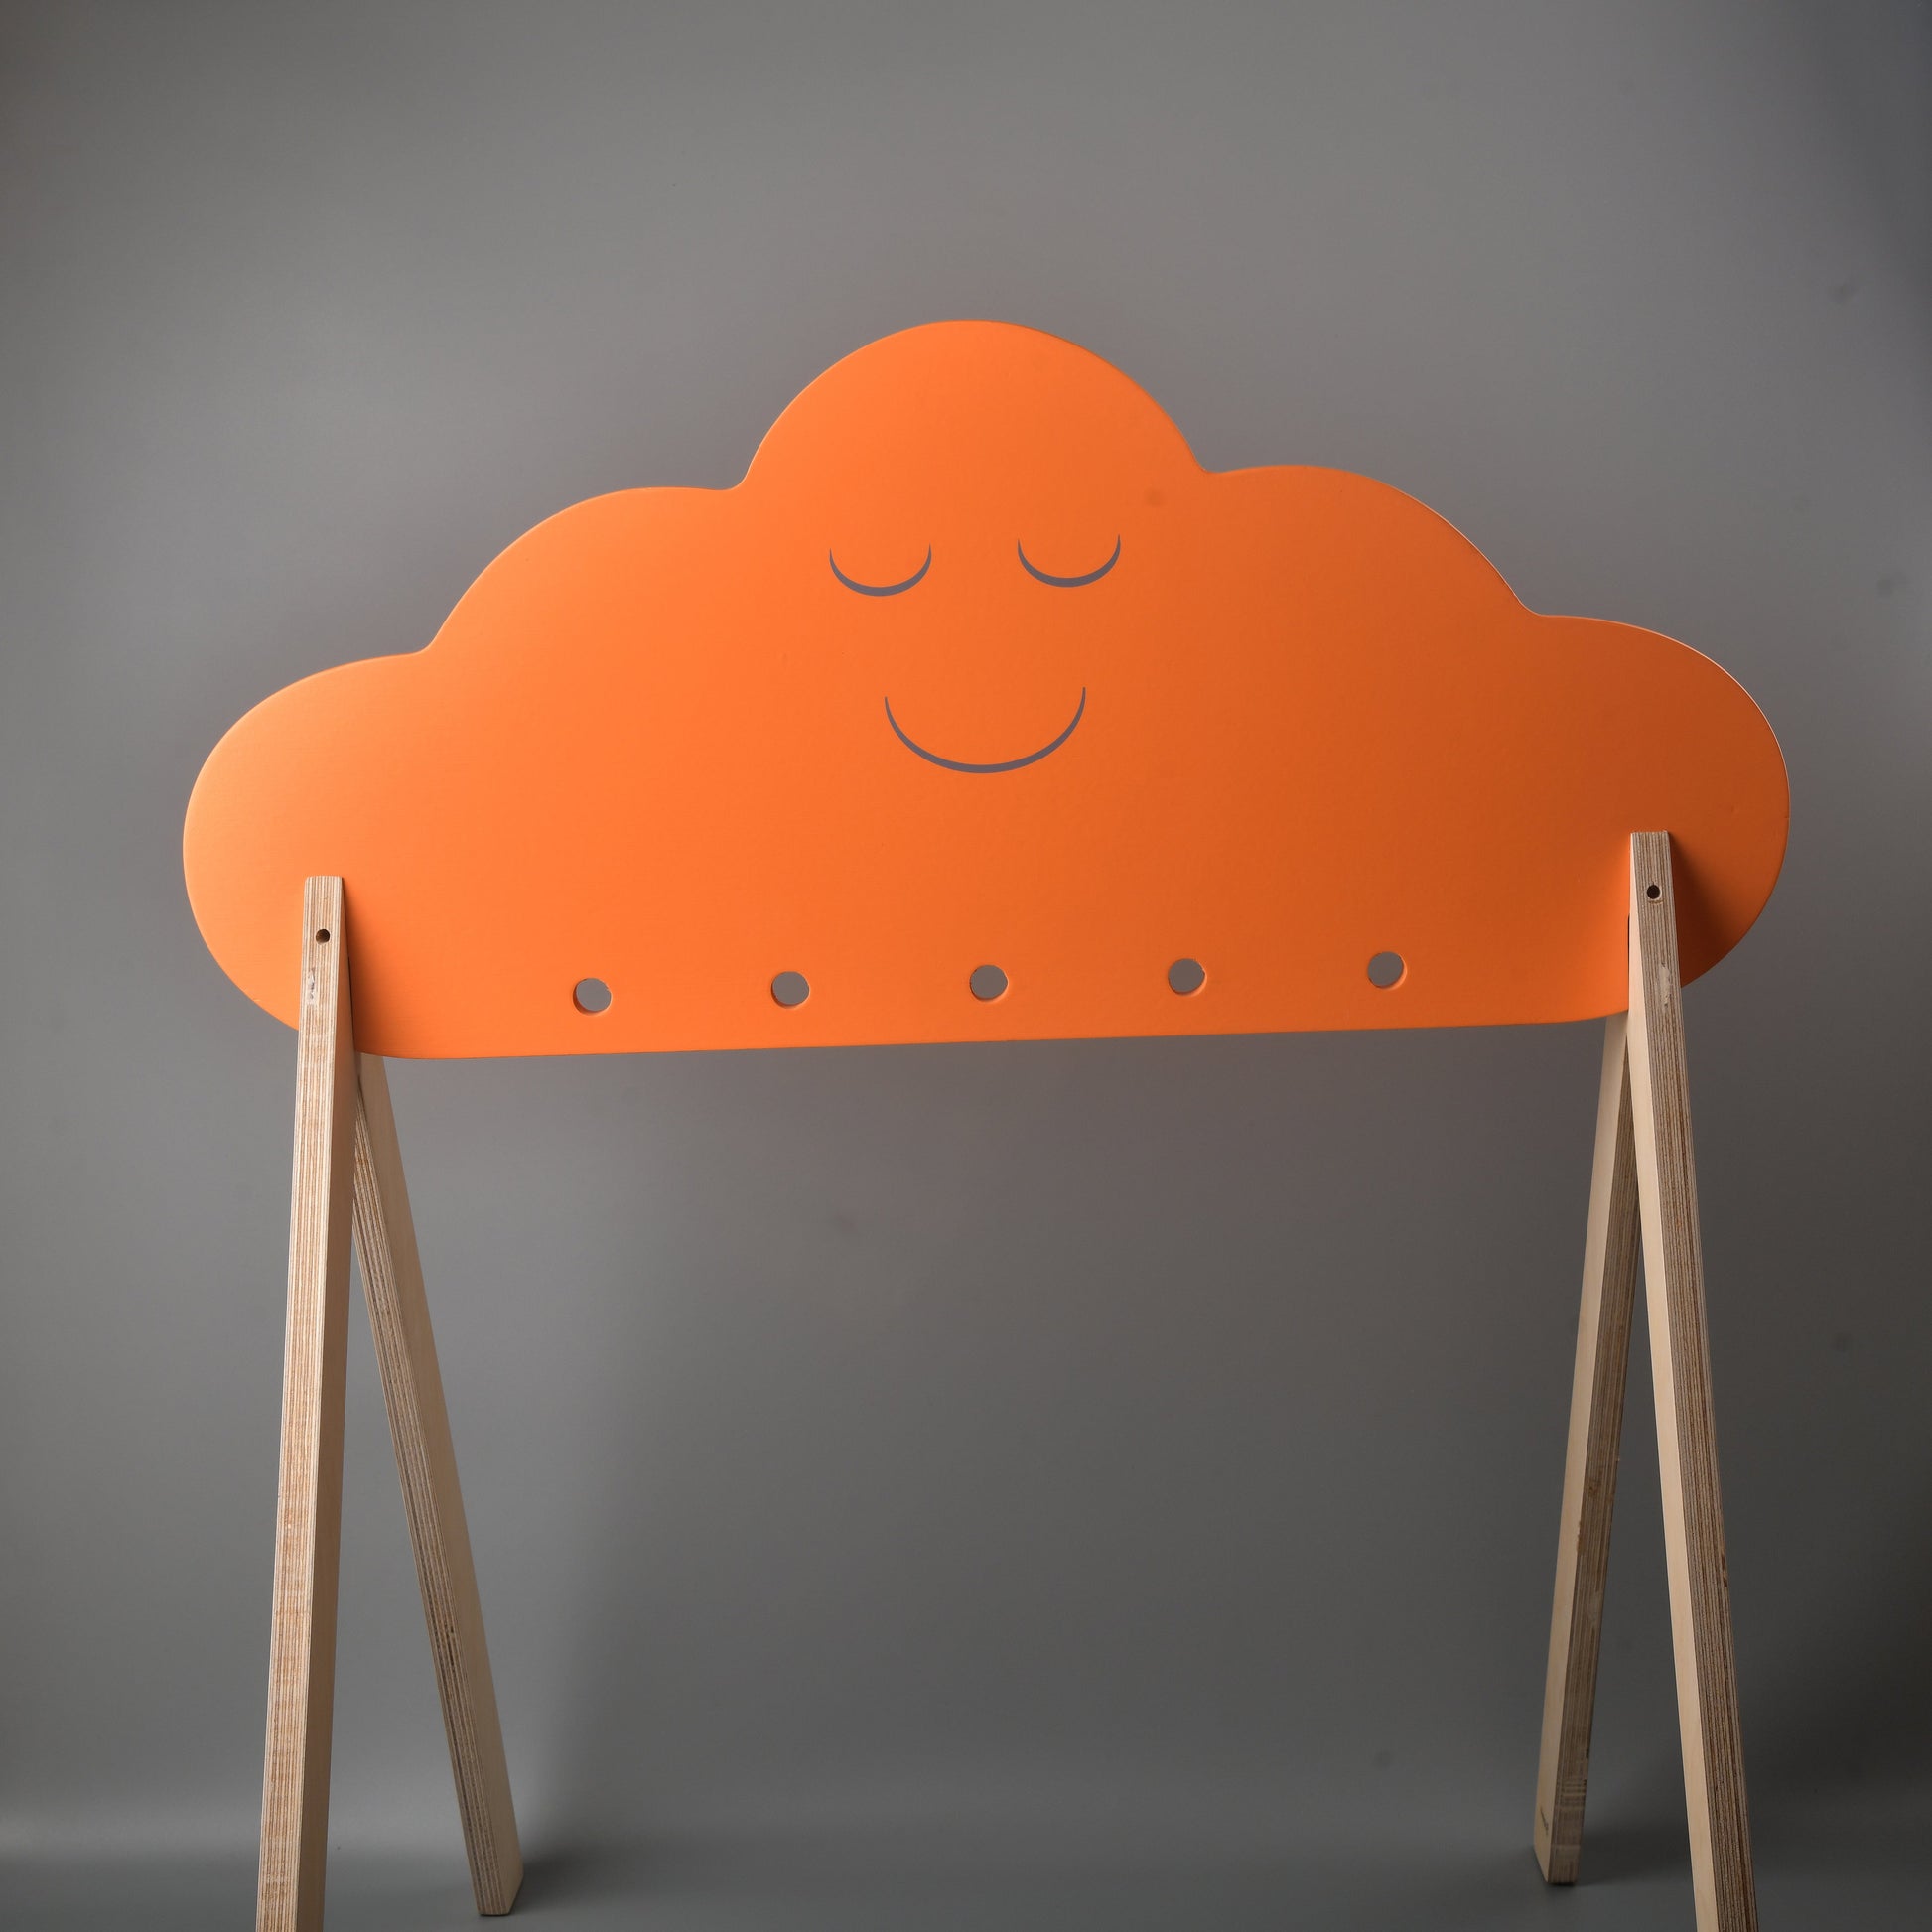 Cloud Baby Play Gym: Orange Handmade Infant Toys